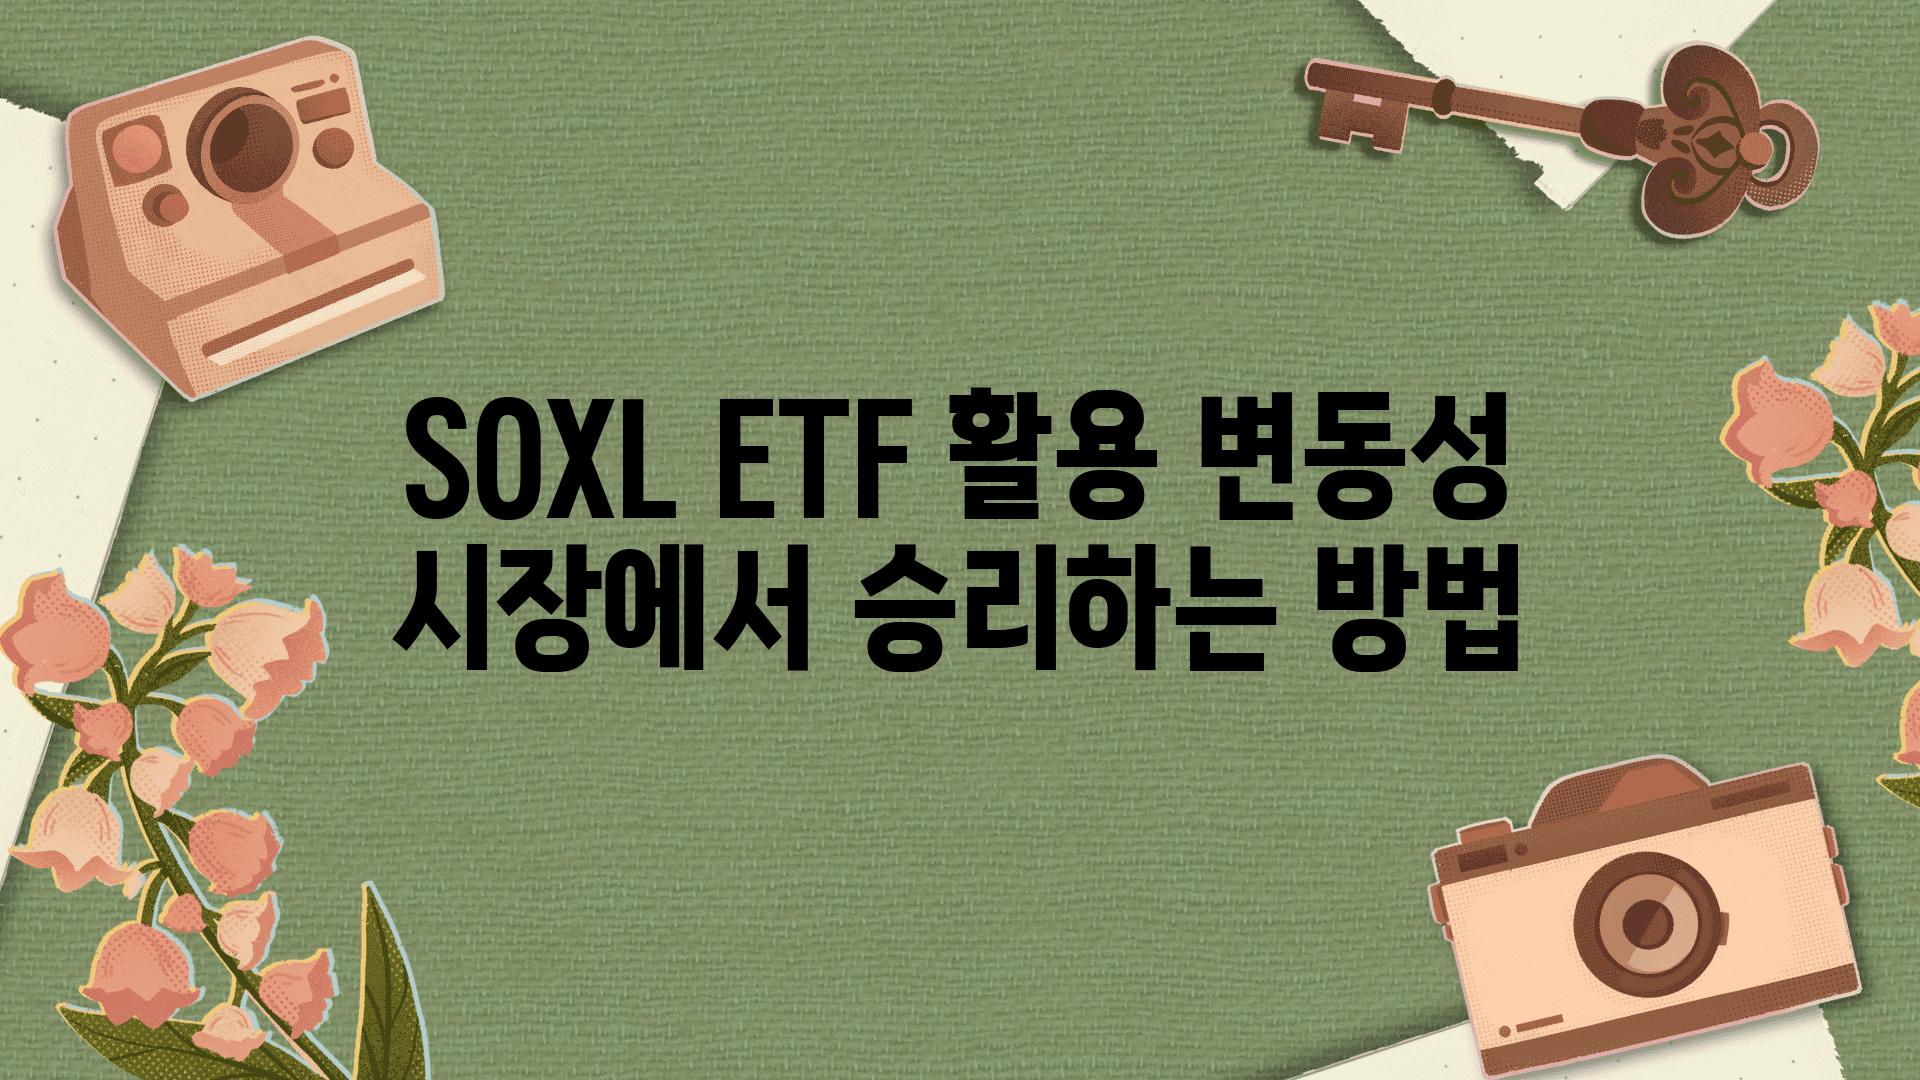 SOXL ETF 활용 변동성 시장에서 승리하는 방법